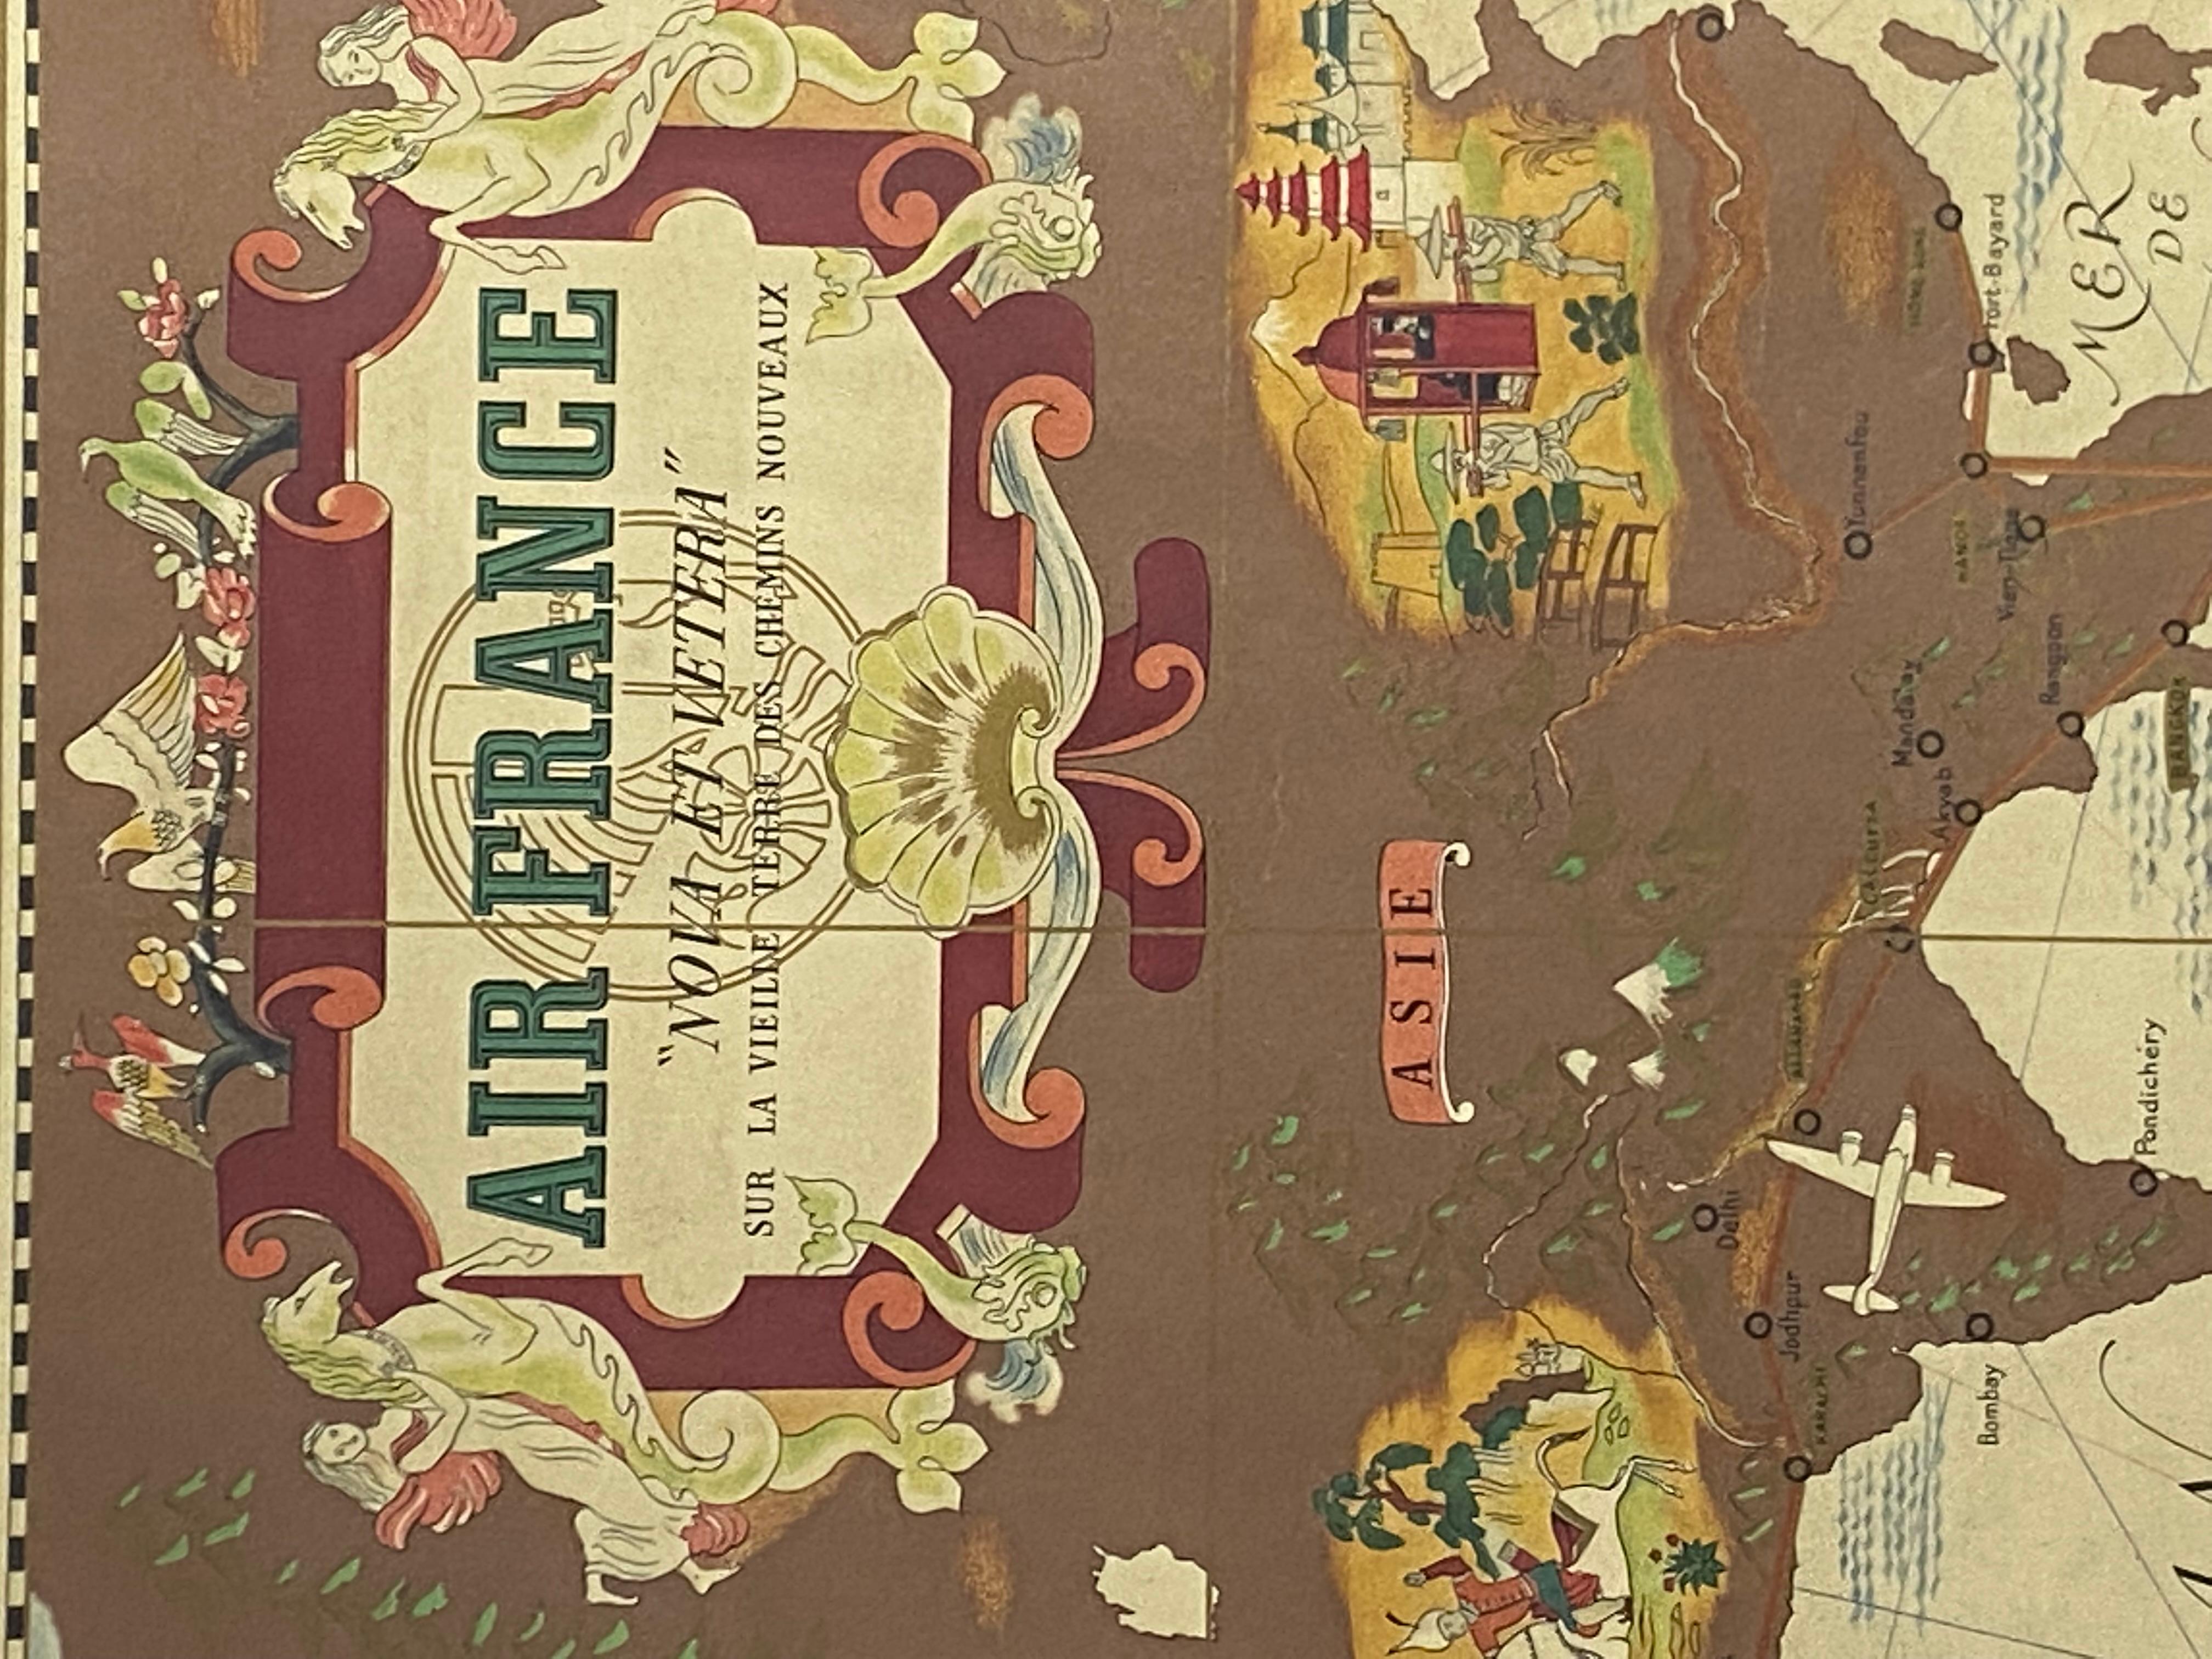 French Lucien Boucher, Air France 'Nova et Vetera' Poster Map, Paris France, 1939 For Sale